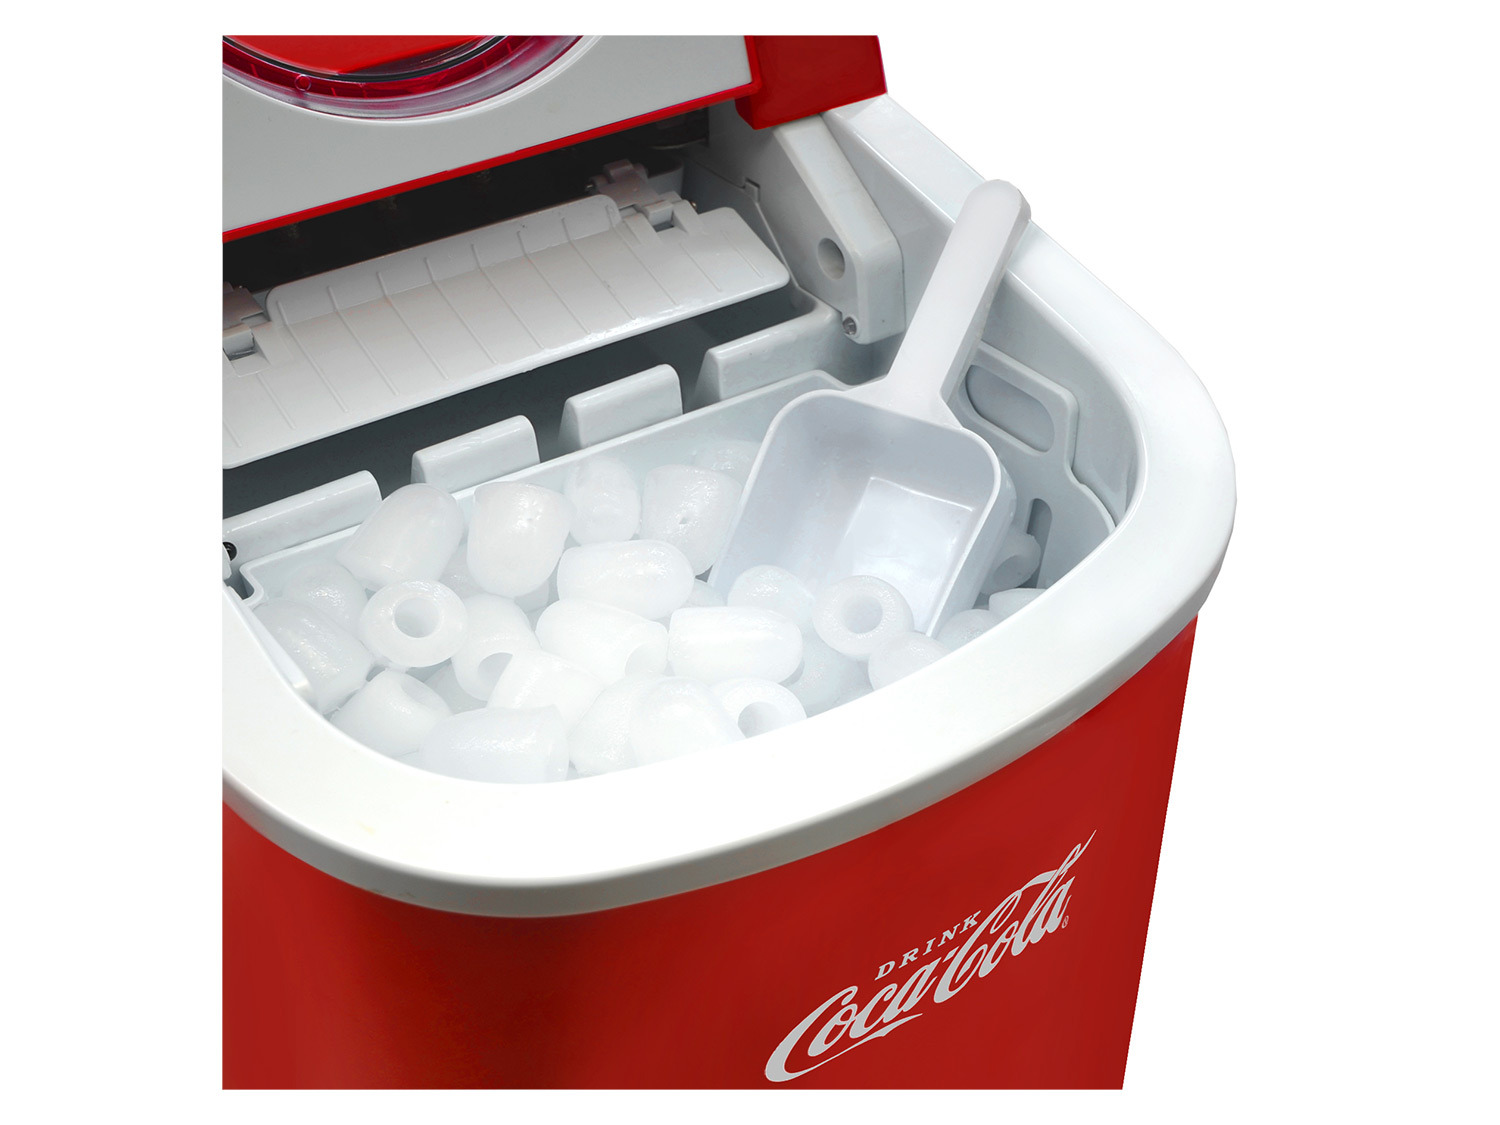 Coca Cola Eiswürfelbereiter SEB-14CC | LIDL